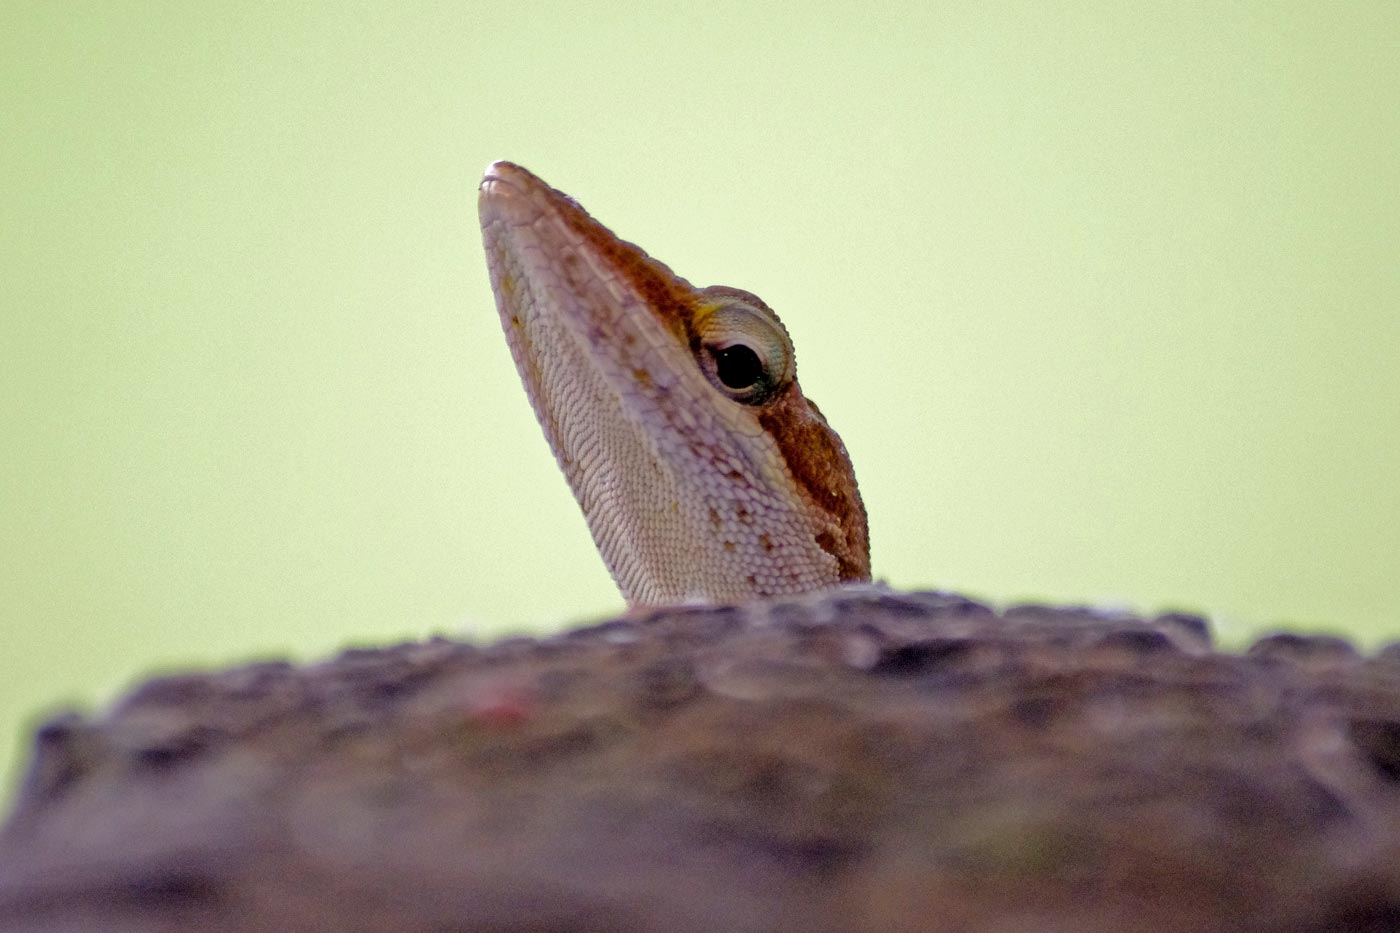 Curious lizard